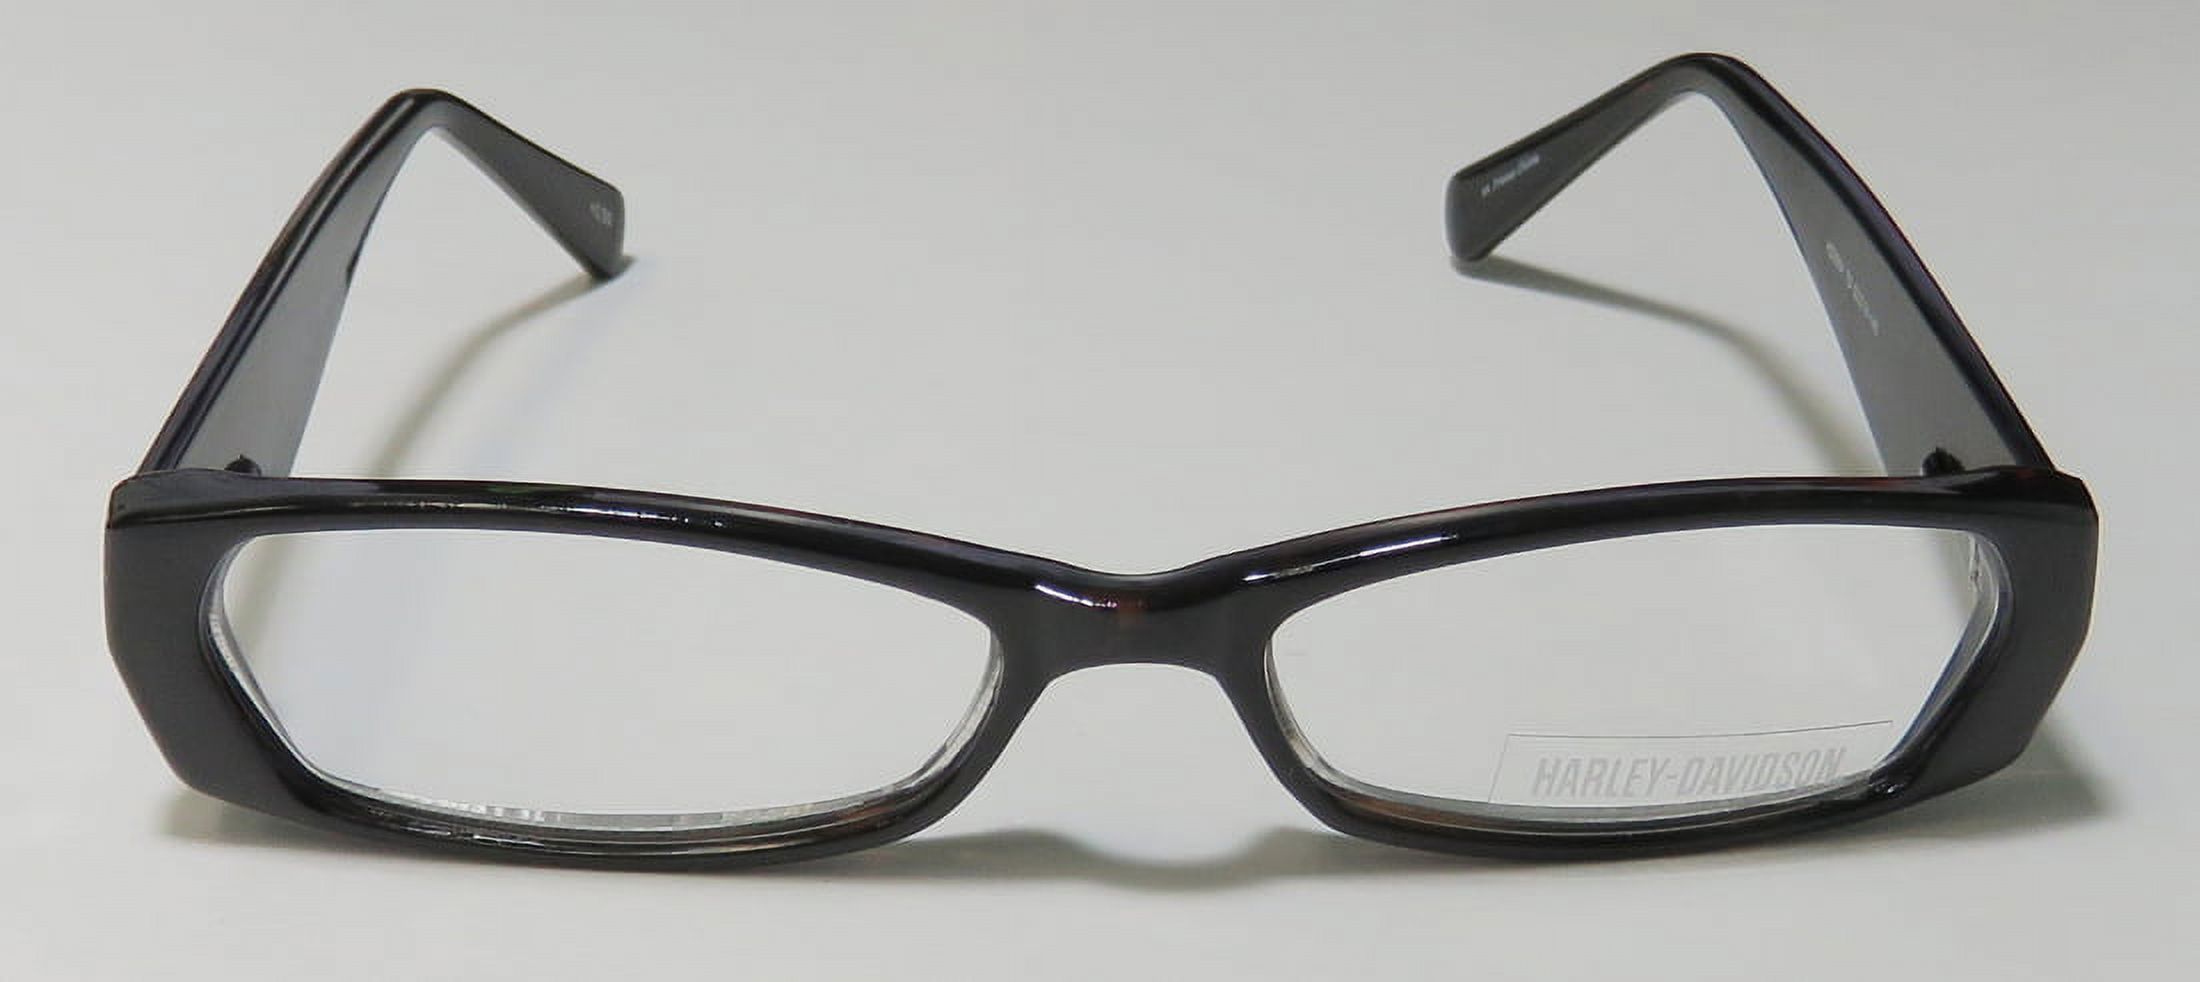 Harley Davidson  52-14-145 mm 2.50 Lenses Rectangular Reading Eyeglasses, Dark Brown - image 3 of 9